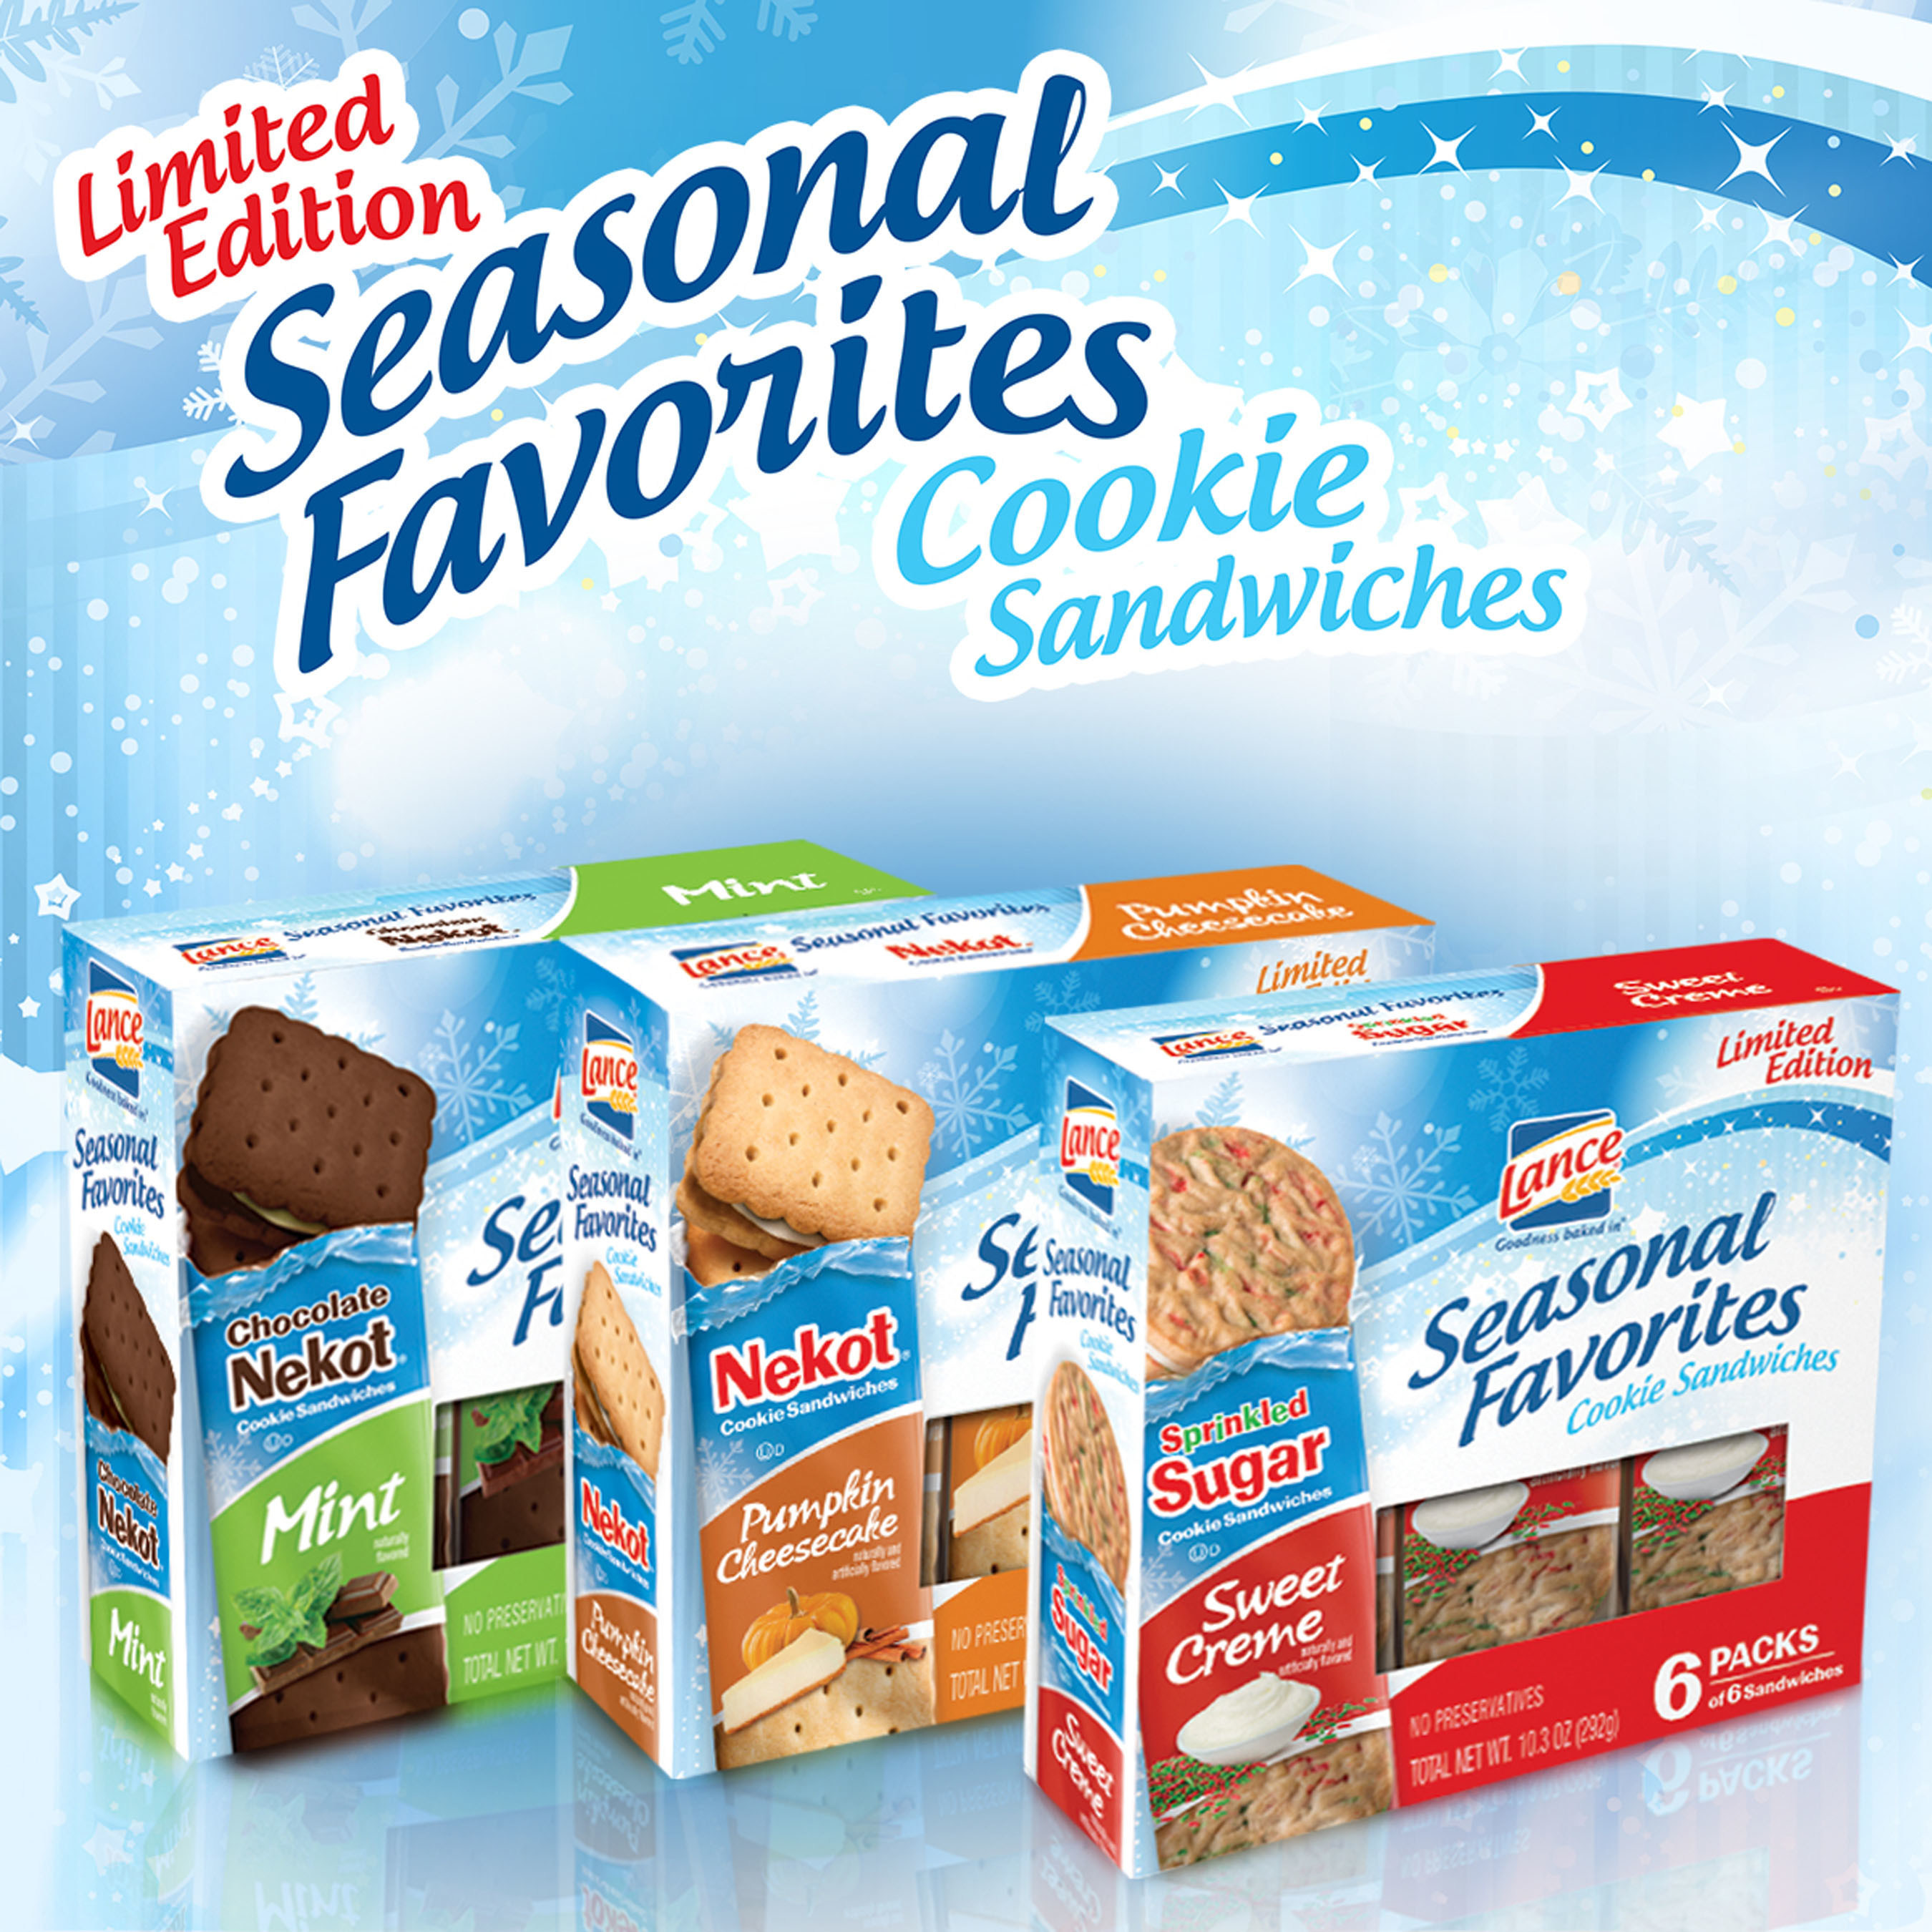 Lance(R) Seasonal Favorites Cookie Sandwiches